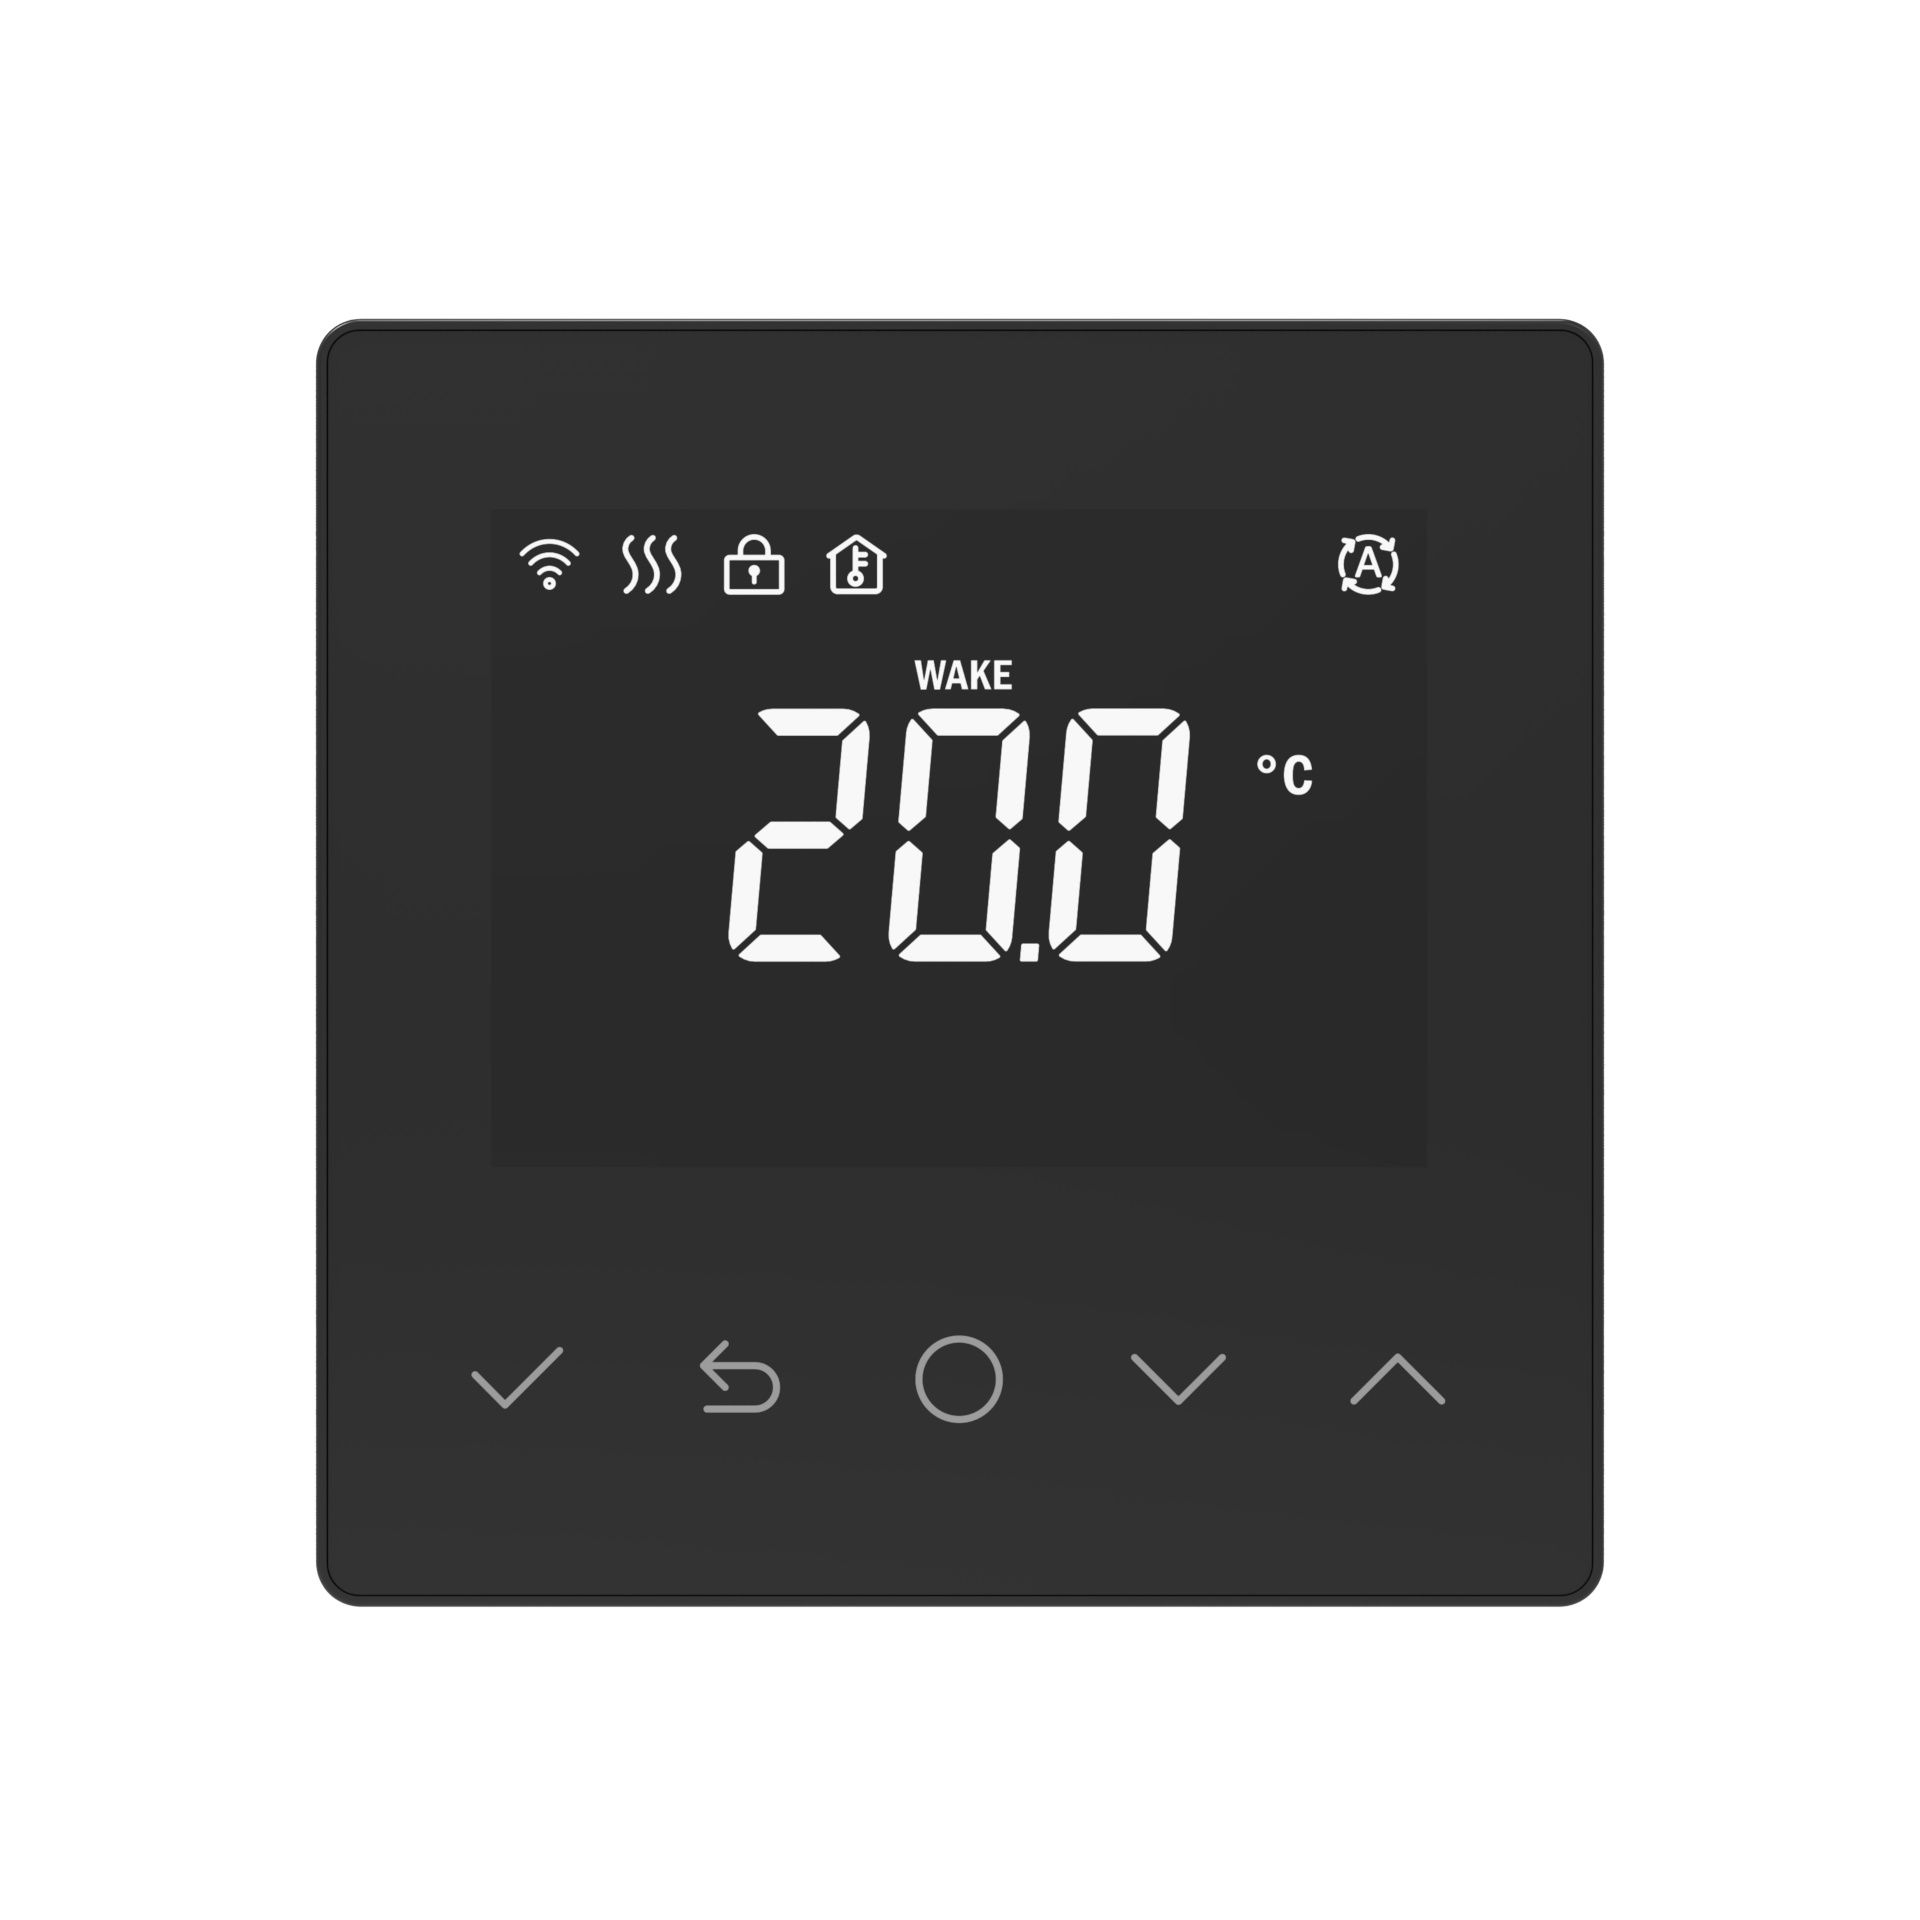 Smart home temperature controller